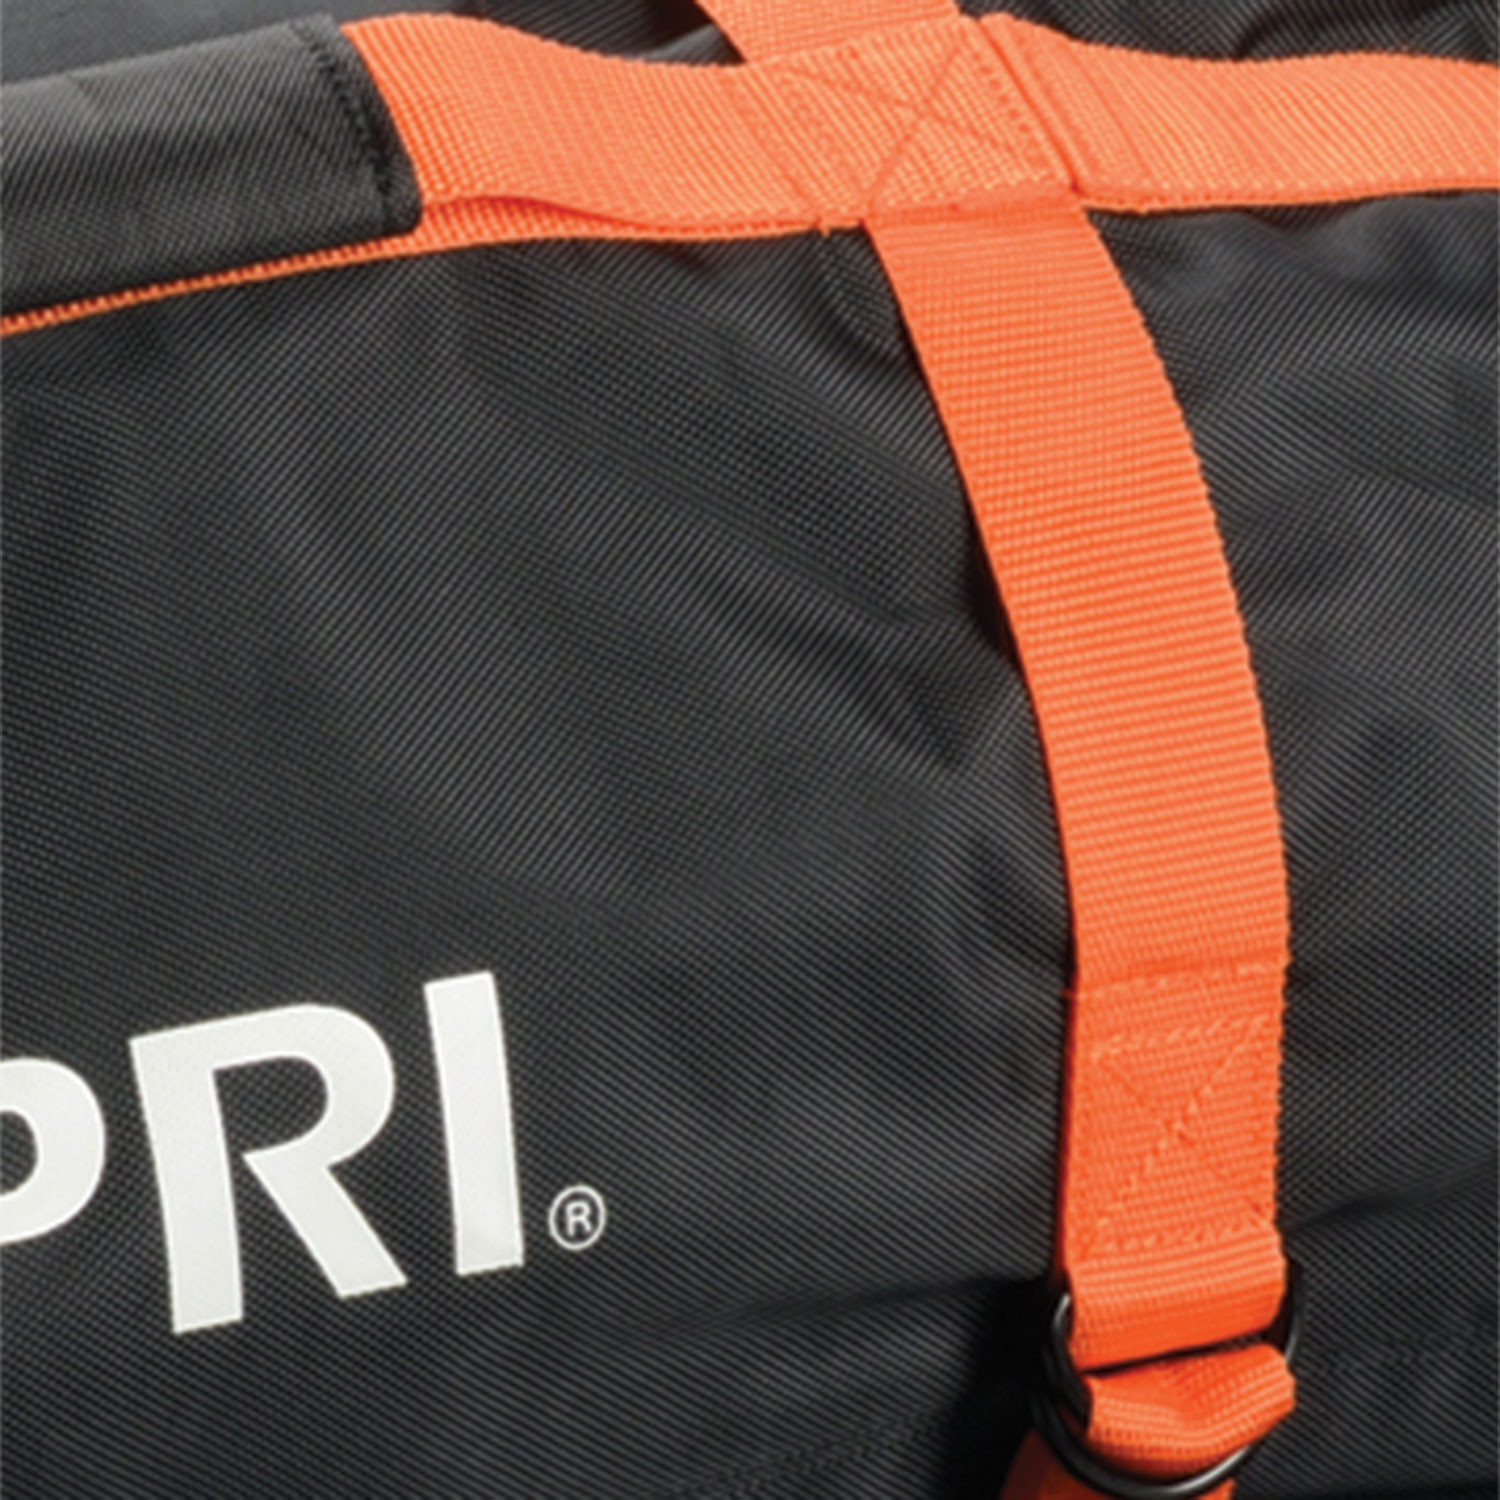 SPRI Performance Bag Weighted Power Bag